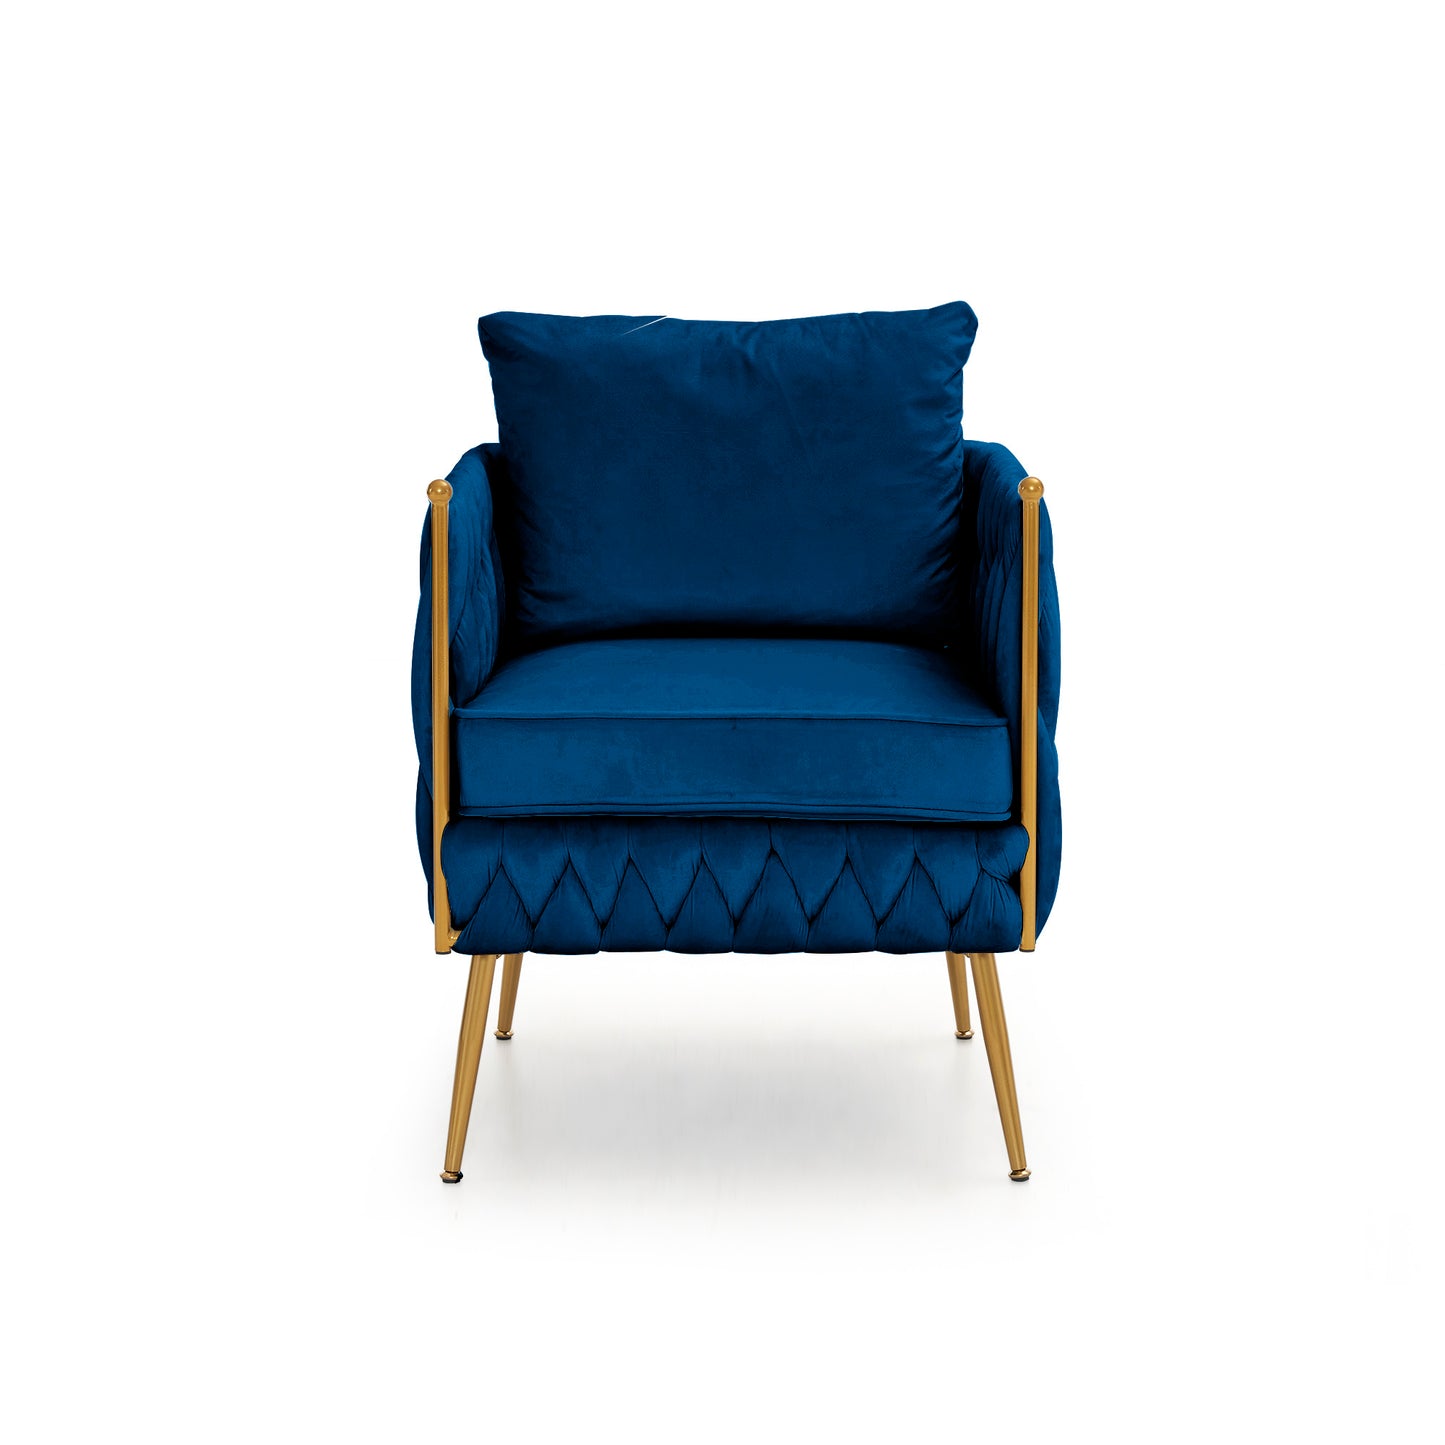 Handmade Woven Velvet Back and Sides Sofa Set, One Accent Chair And One 3 Seater Sofa, Gold Frame and Gold Legs , Modern Living Room Sofa Sets for Living Room , Blue Velvet